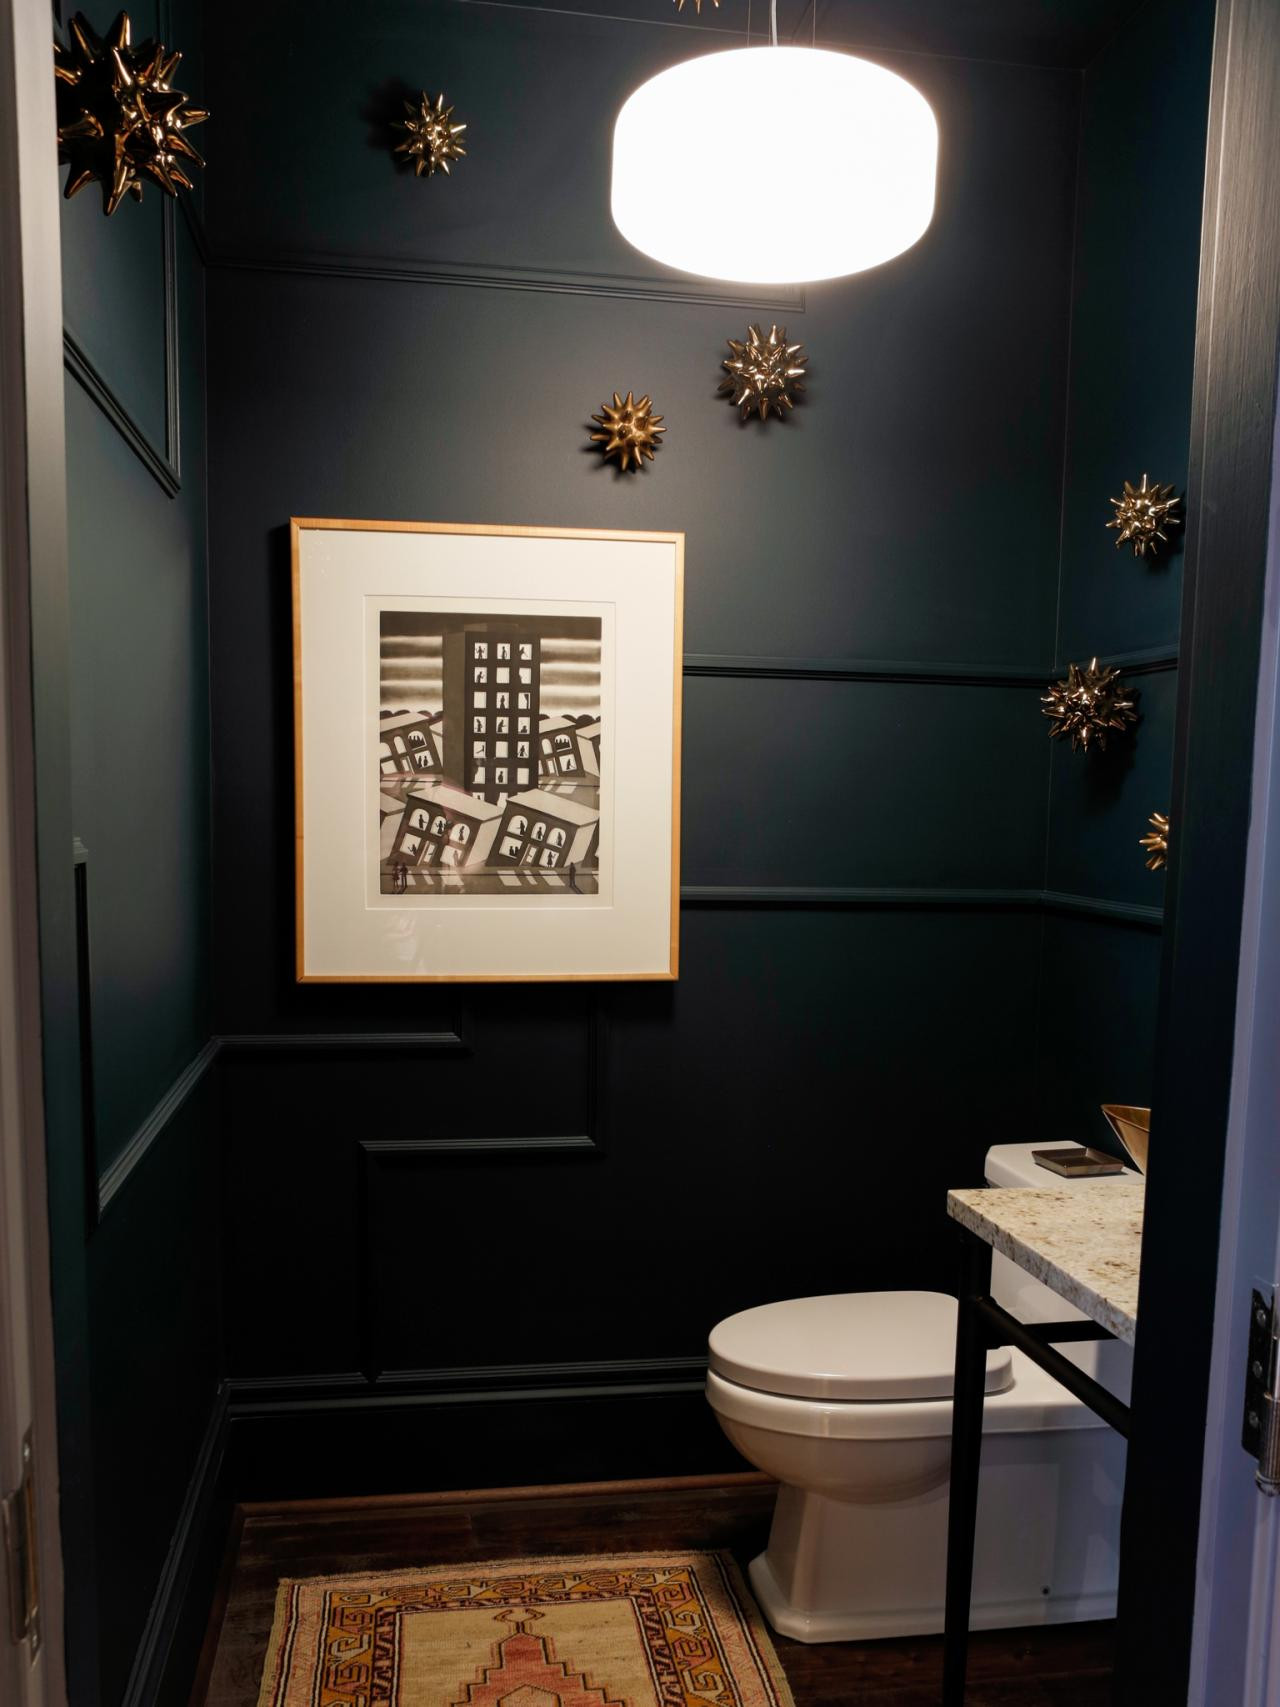 Bathroom Decor Ideas Images
 20 Bathroom Decorating Ideas mashoid